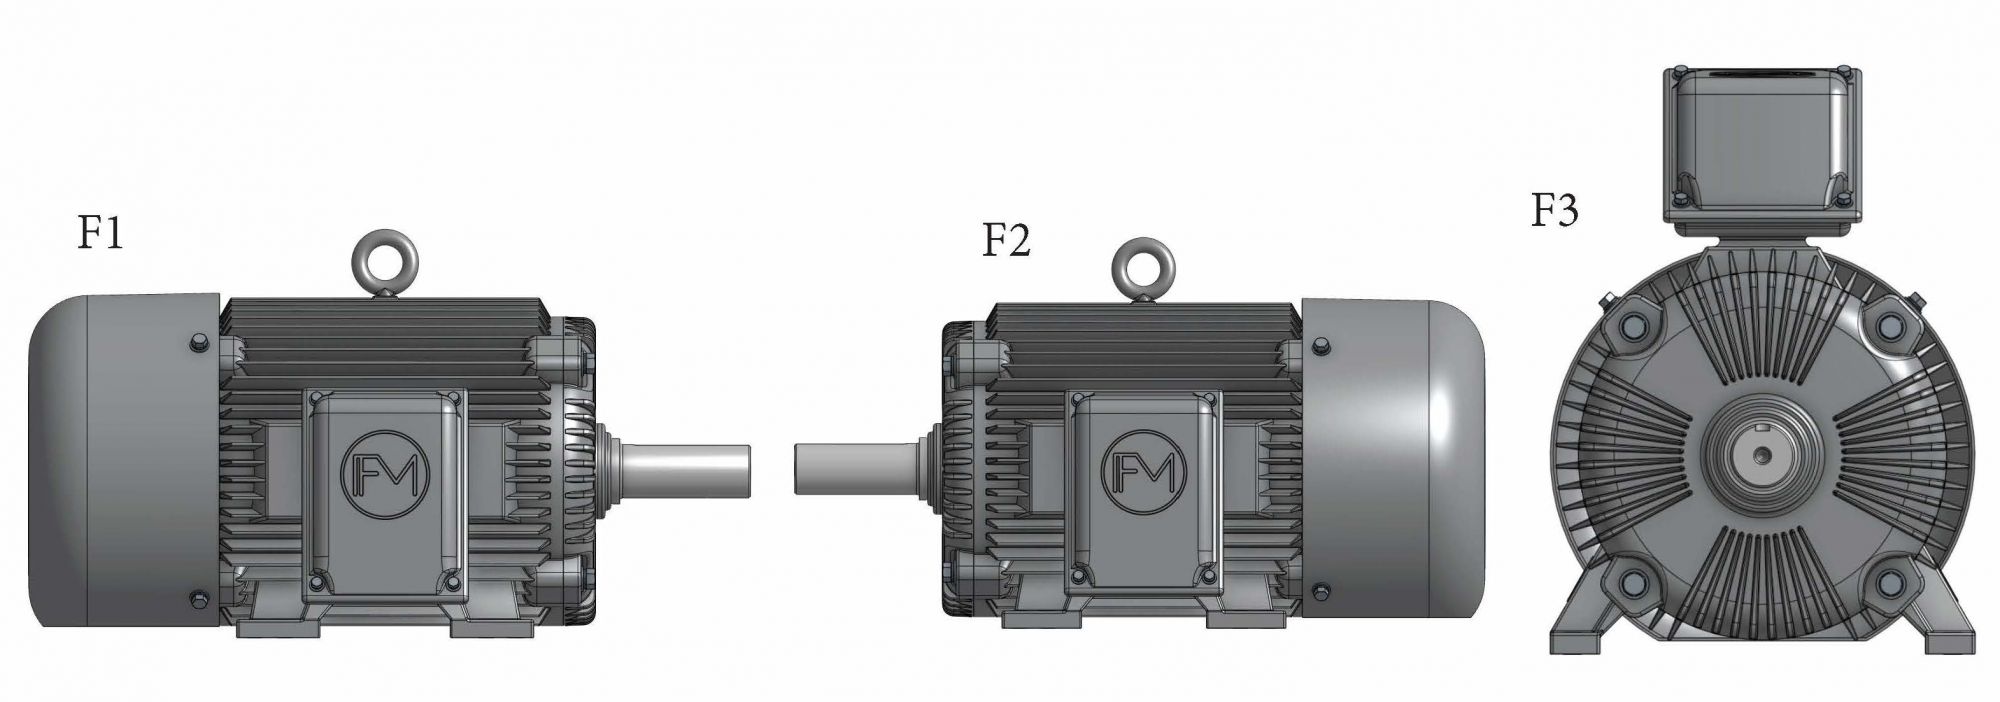 Typical F1, F2 and F3 motor arrangements